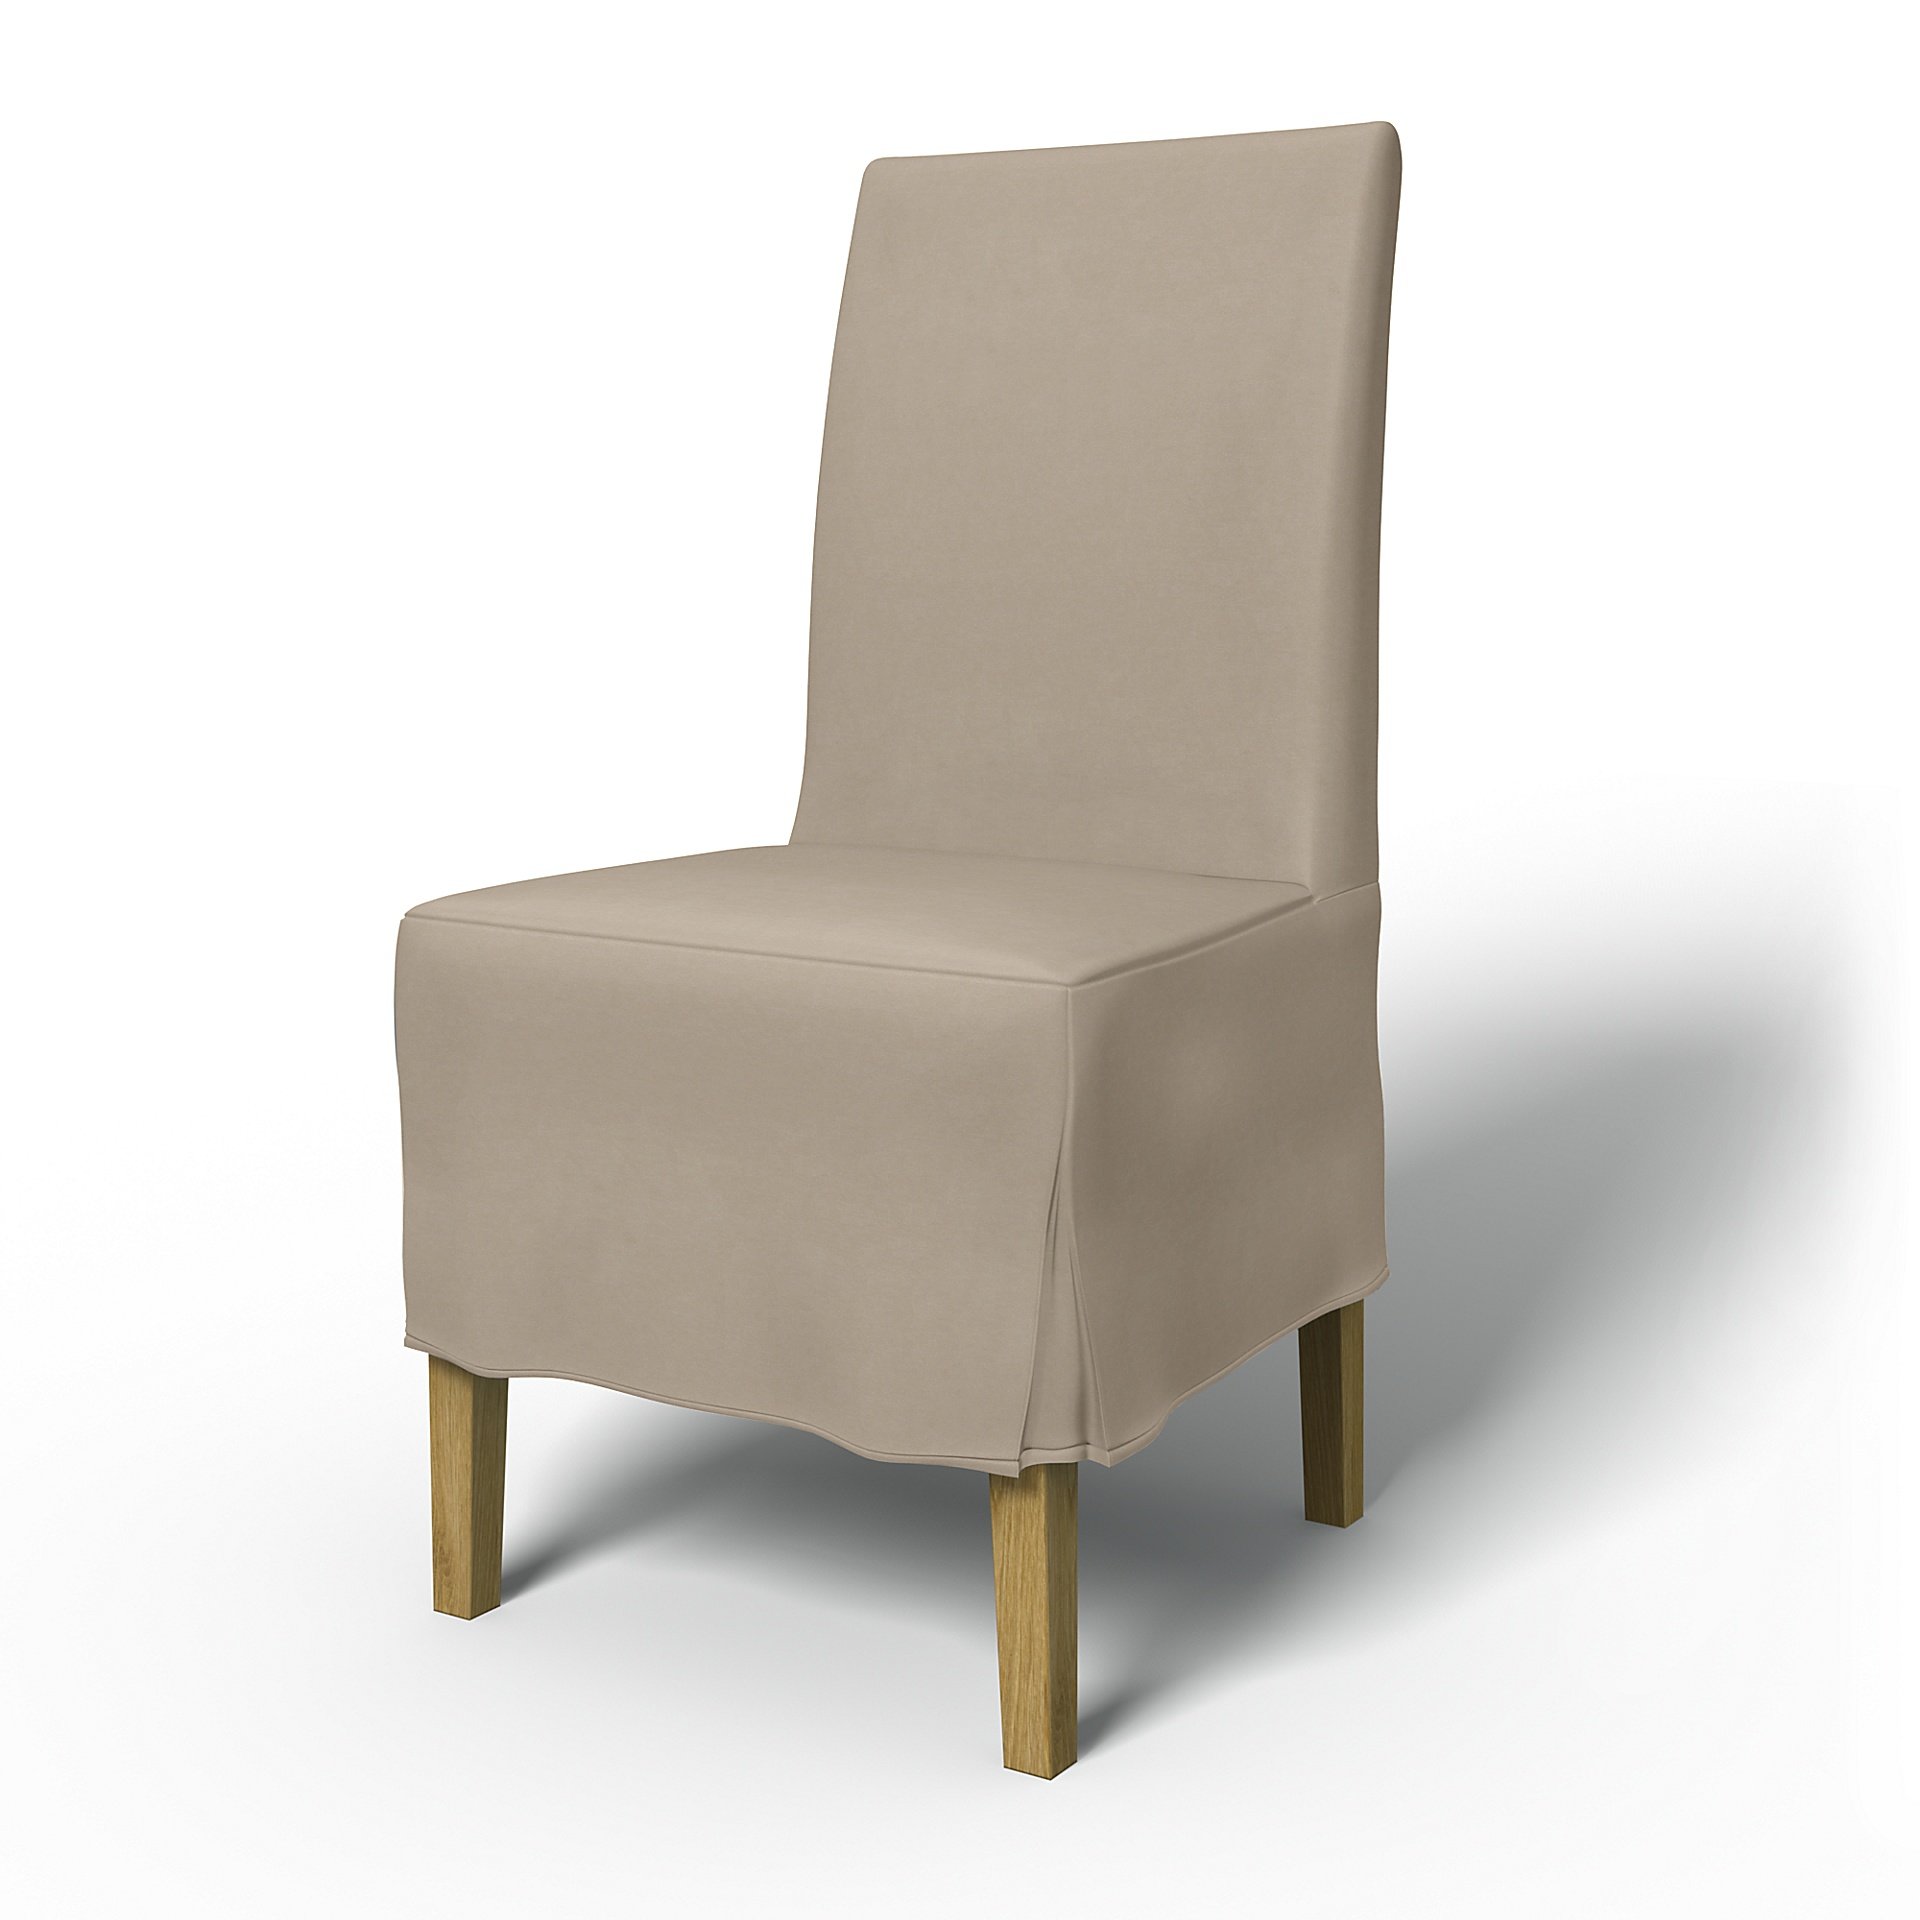 IKEA - Henriksdal Dining Chair Cover Medium skirt with Box Pleat (Standard model), Feather, Velvet -